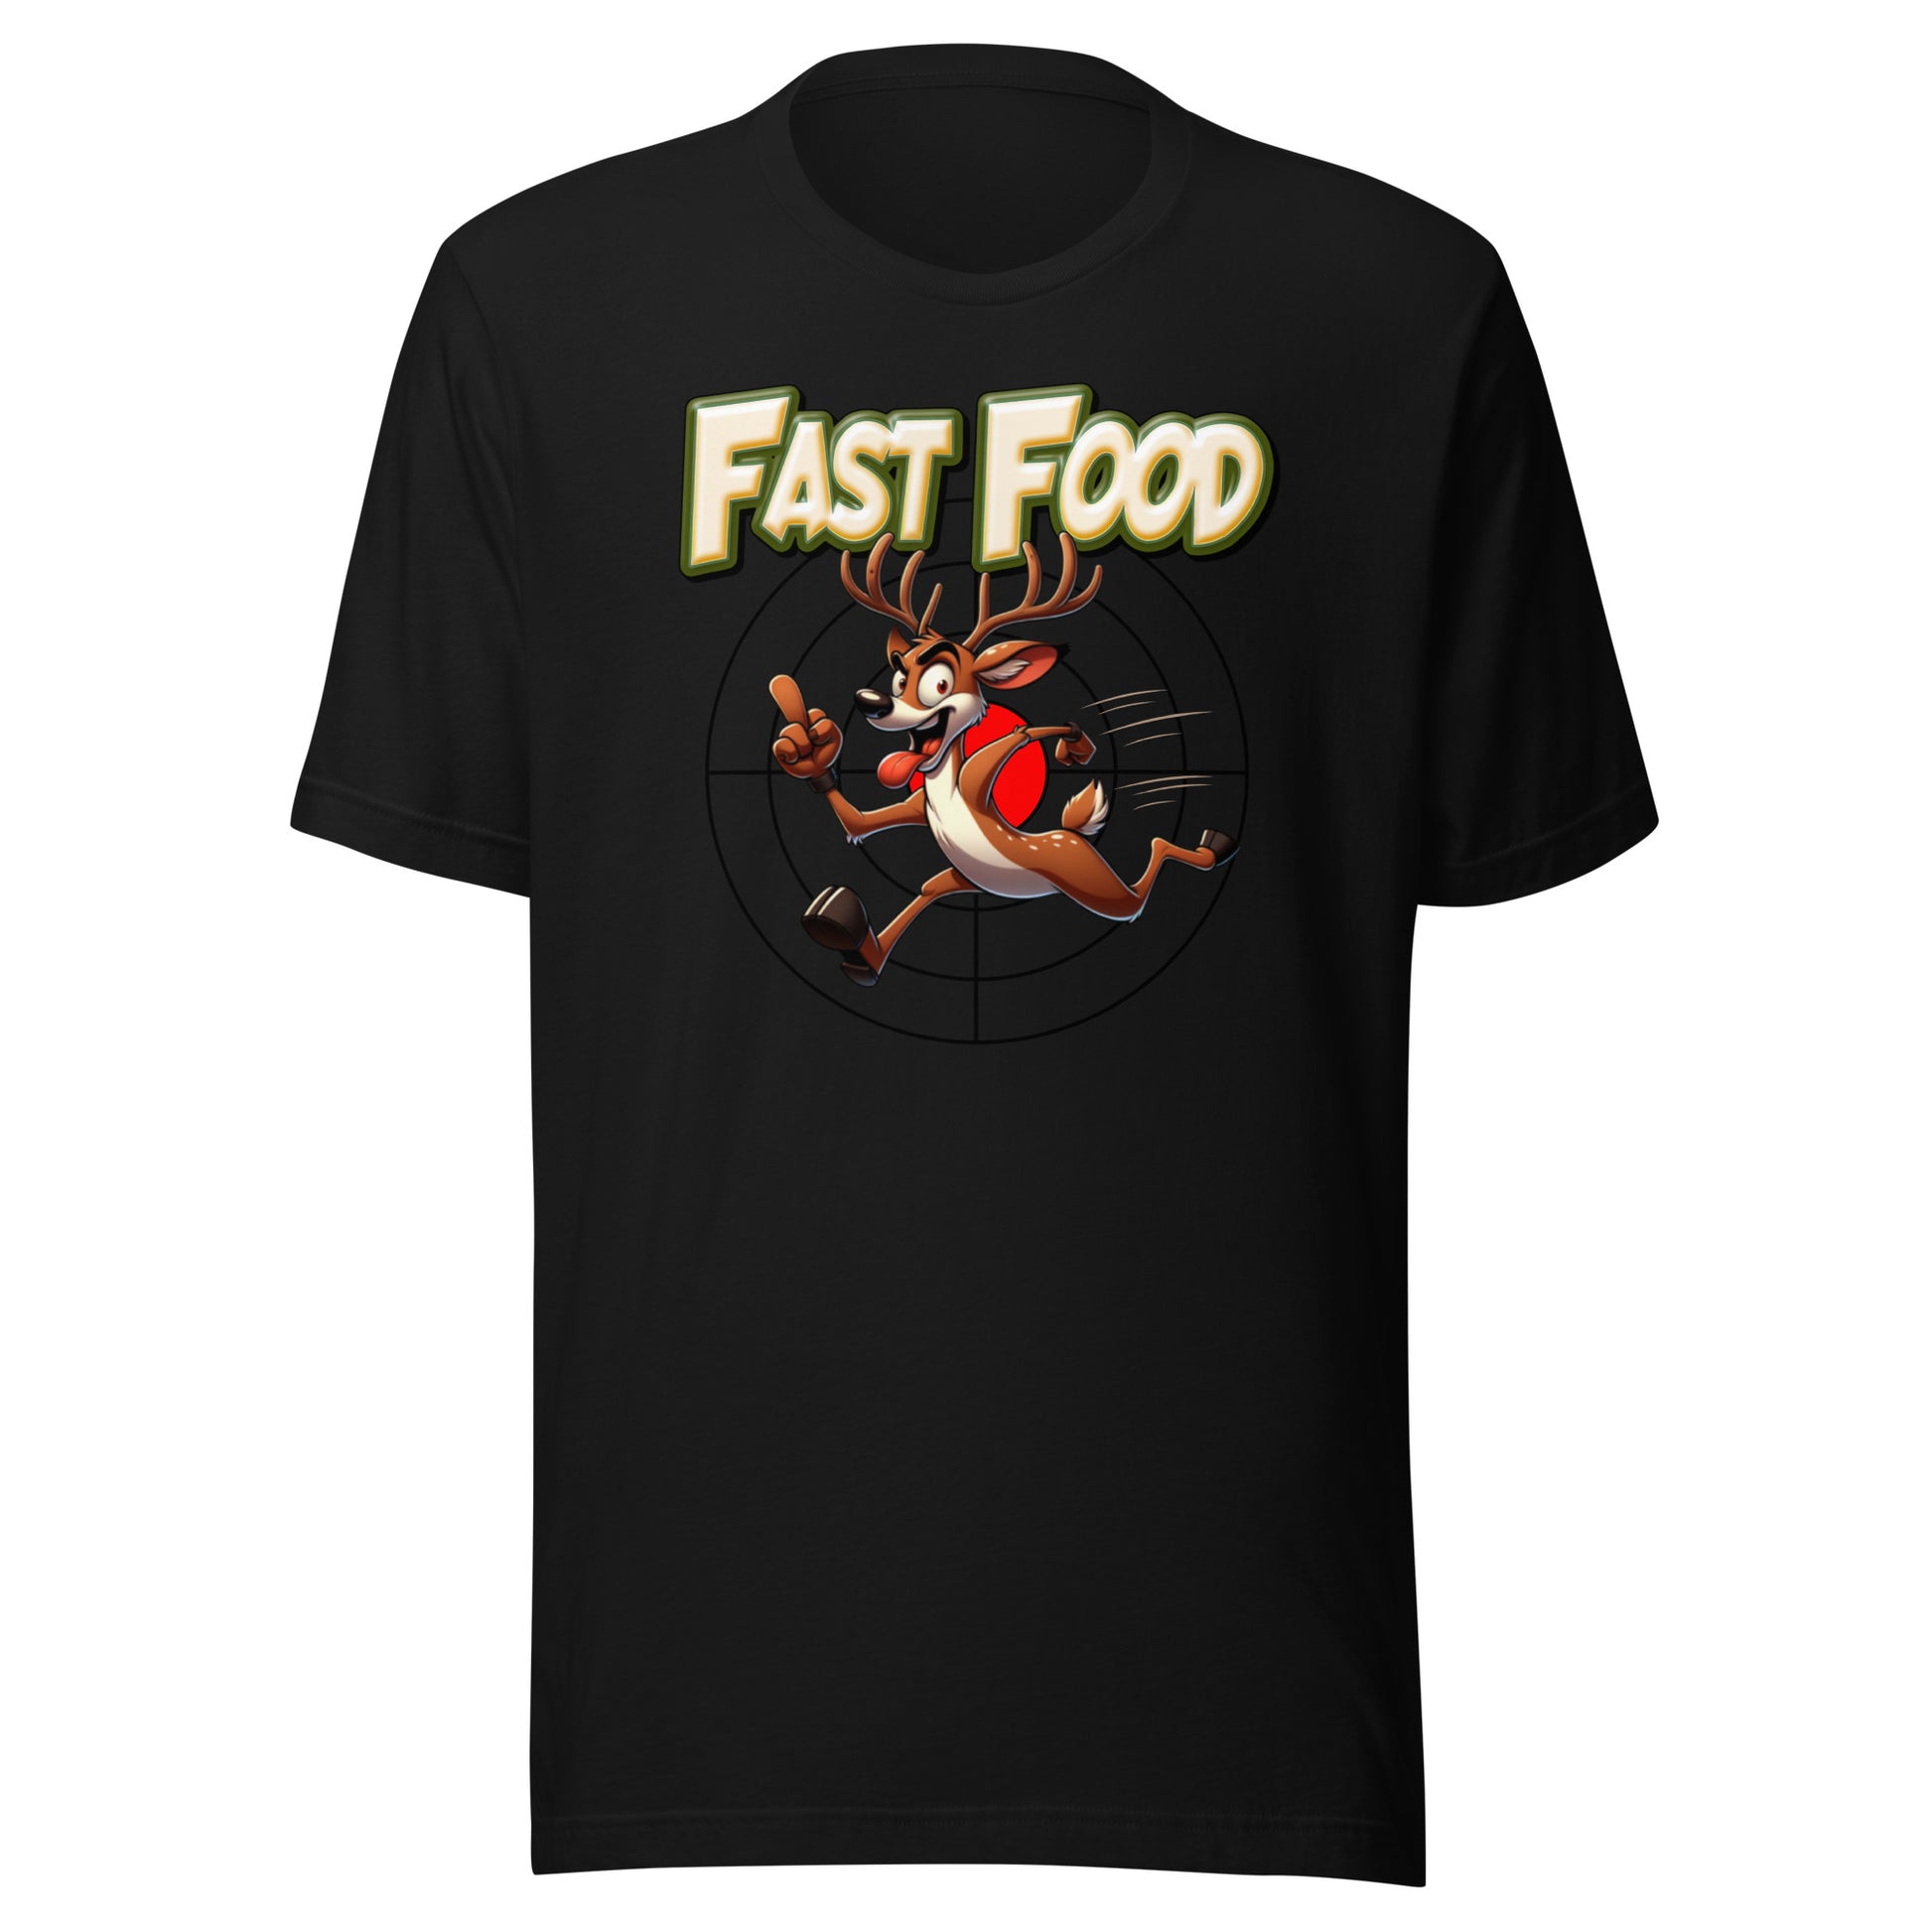  Fast Food Deer T-Shirt Unisex Hunting Tee ArcZeal Designs